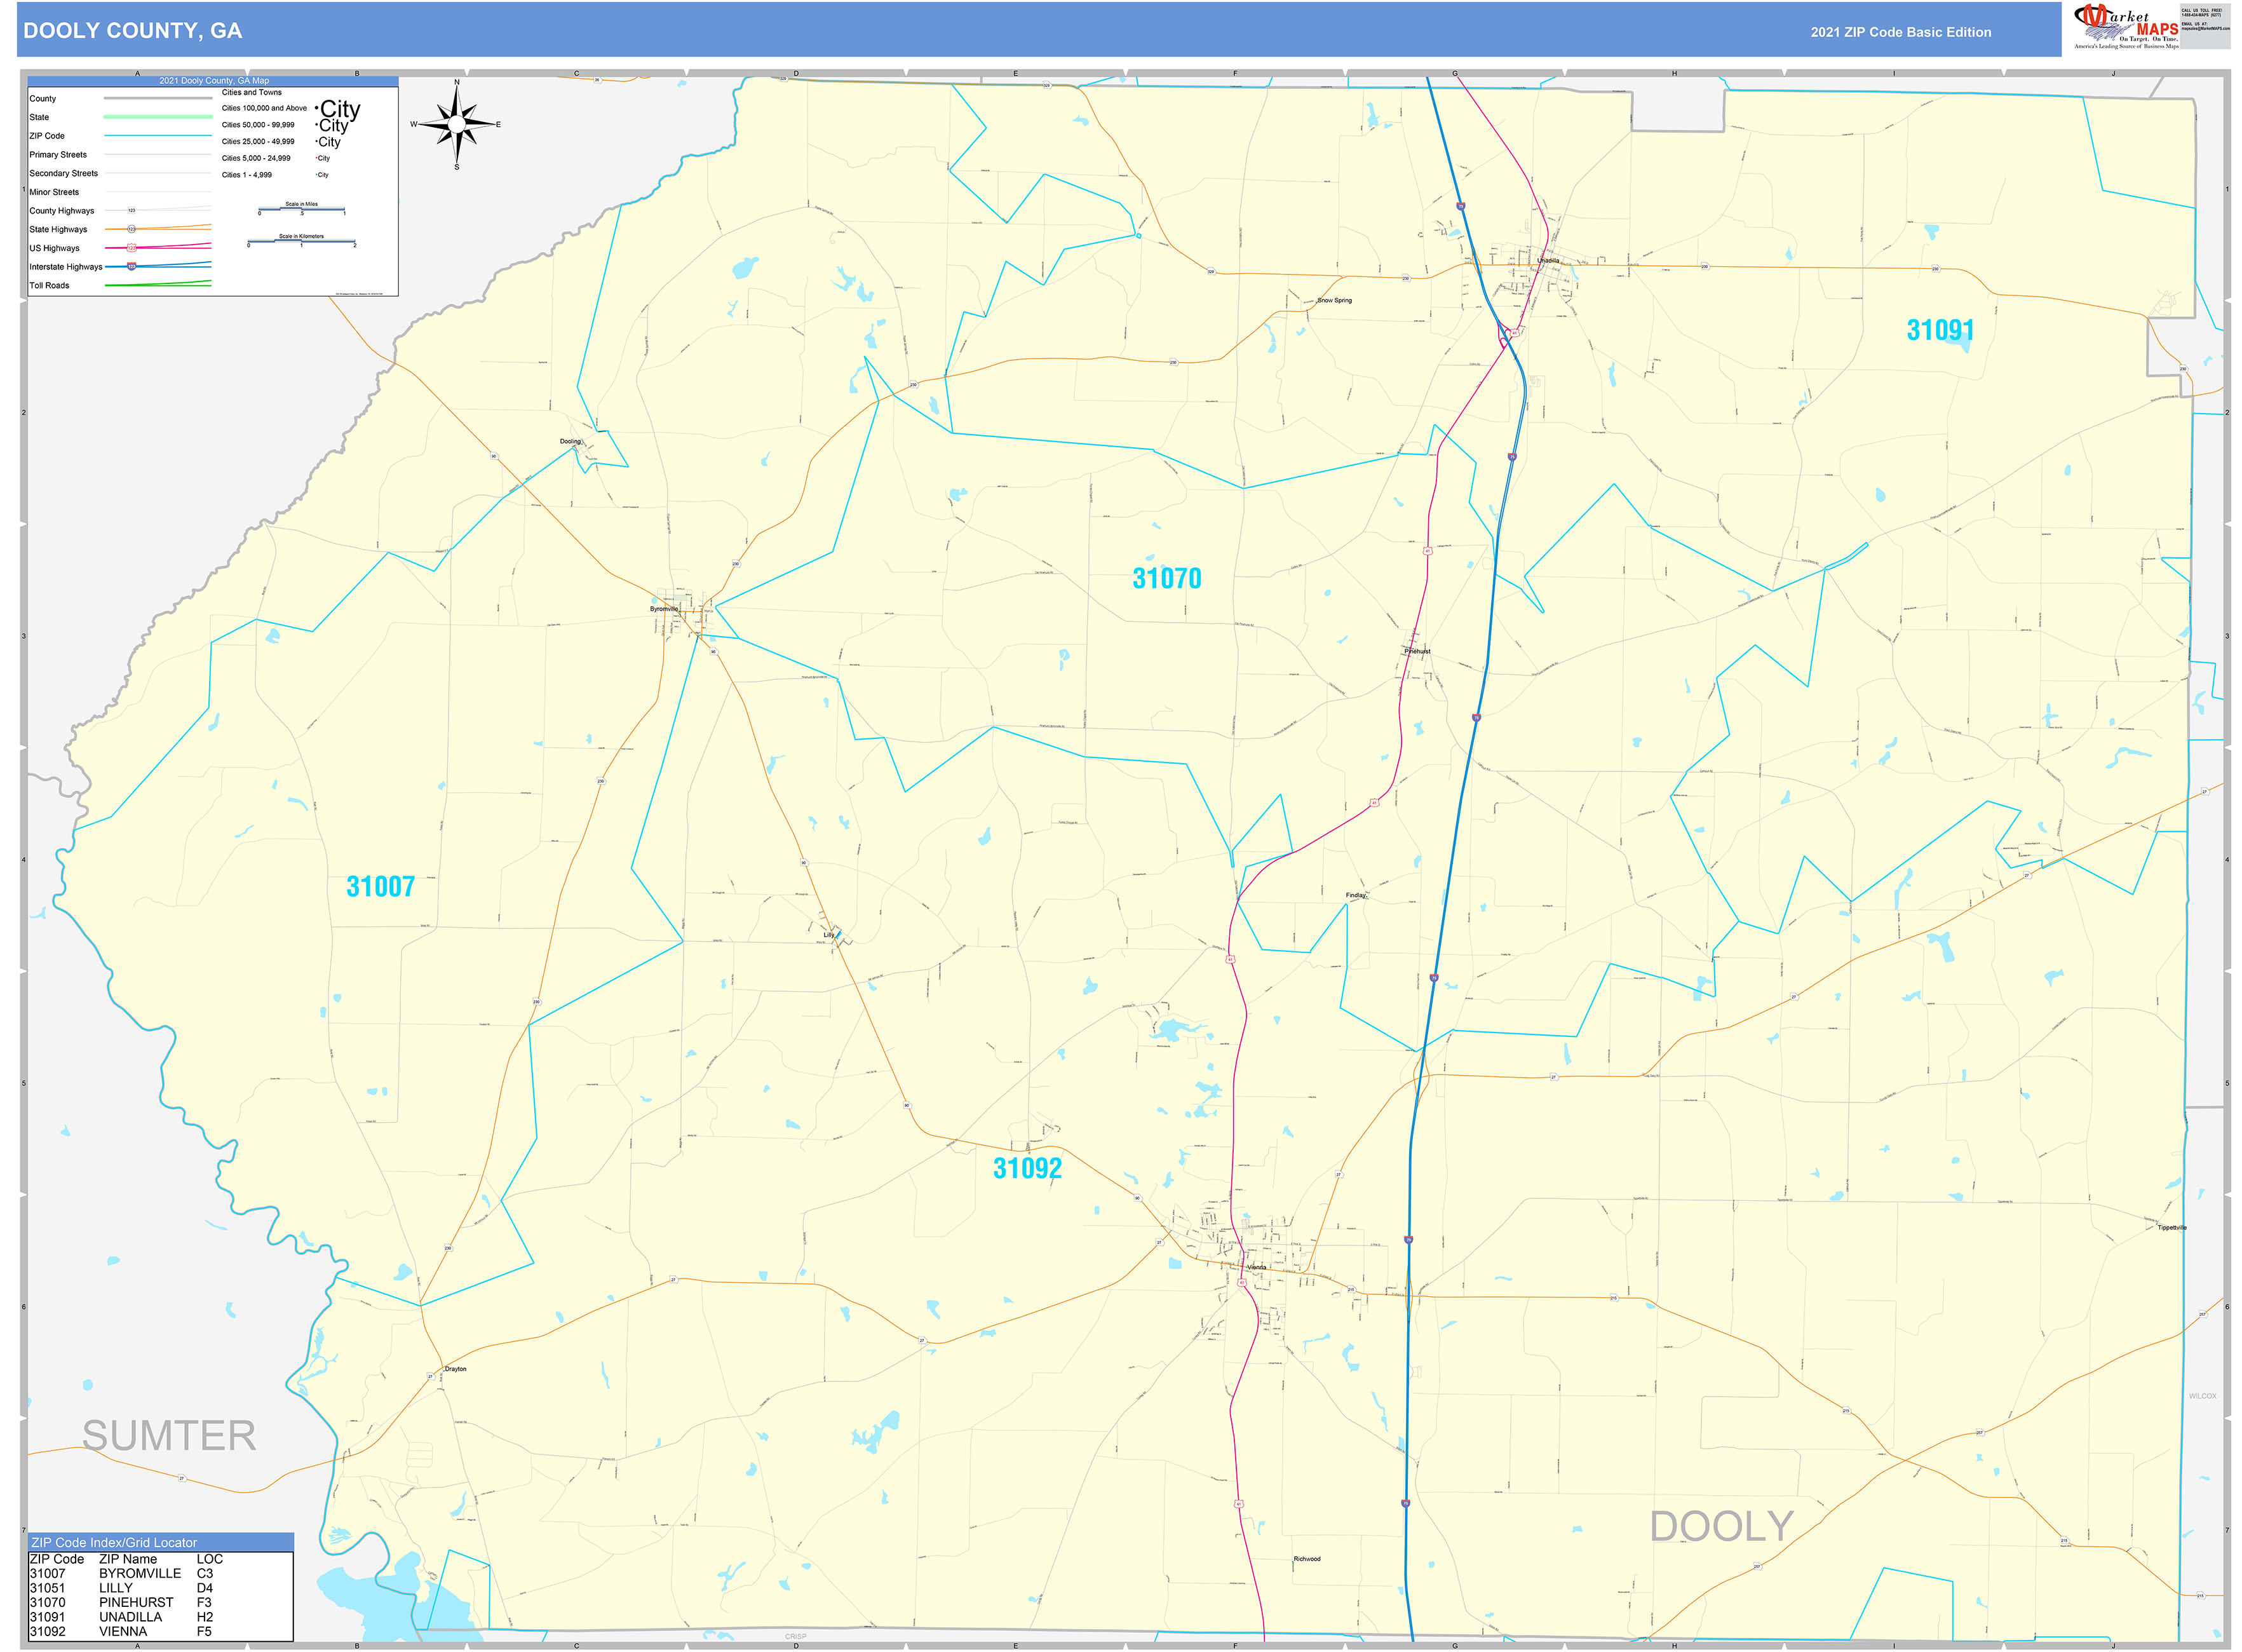 Dooly County GA Zip Code Wall Map Basic Style by MarketMAPS MapSales